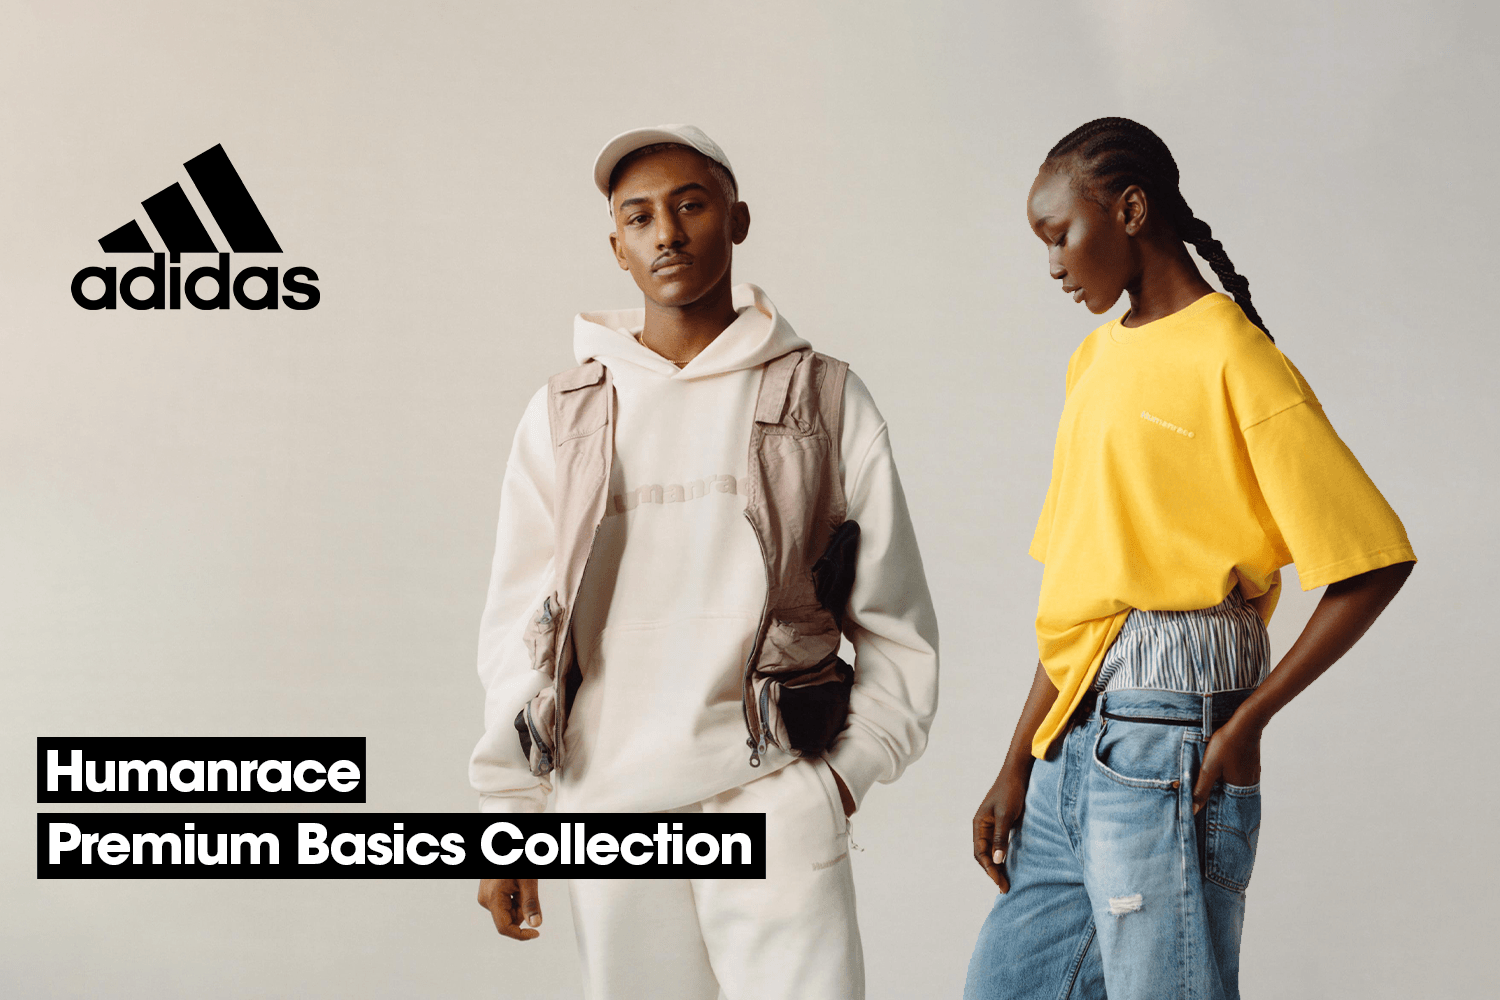 Die Pharrell Williams x adidas Basics Kollektion